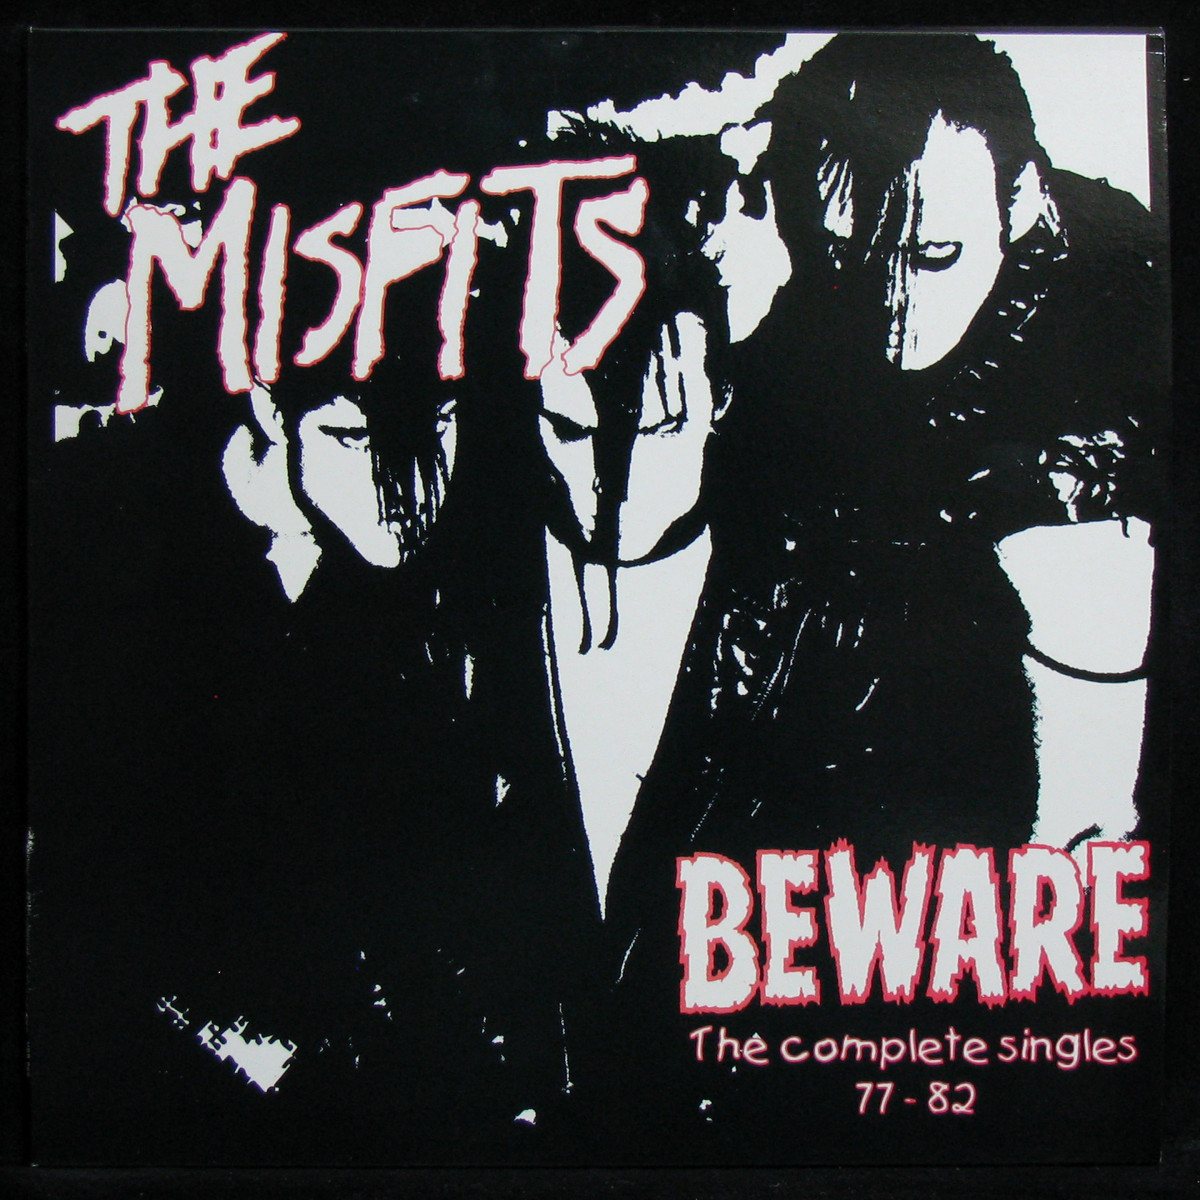 Beware The Complete Singles 77 - 82